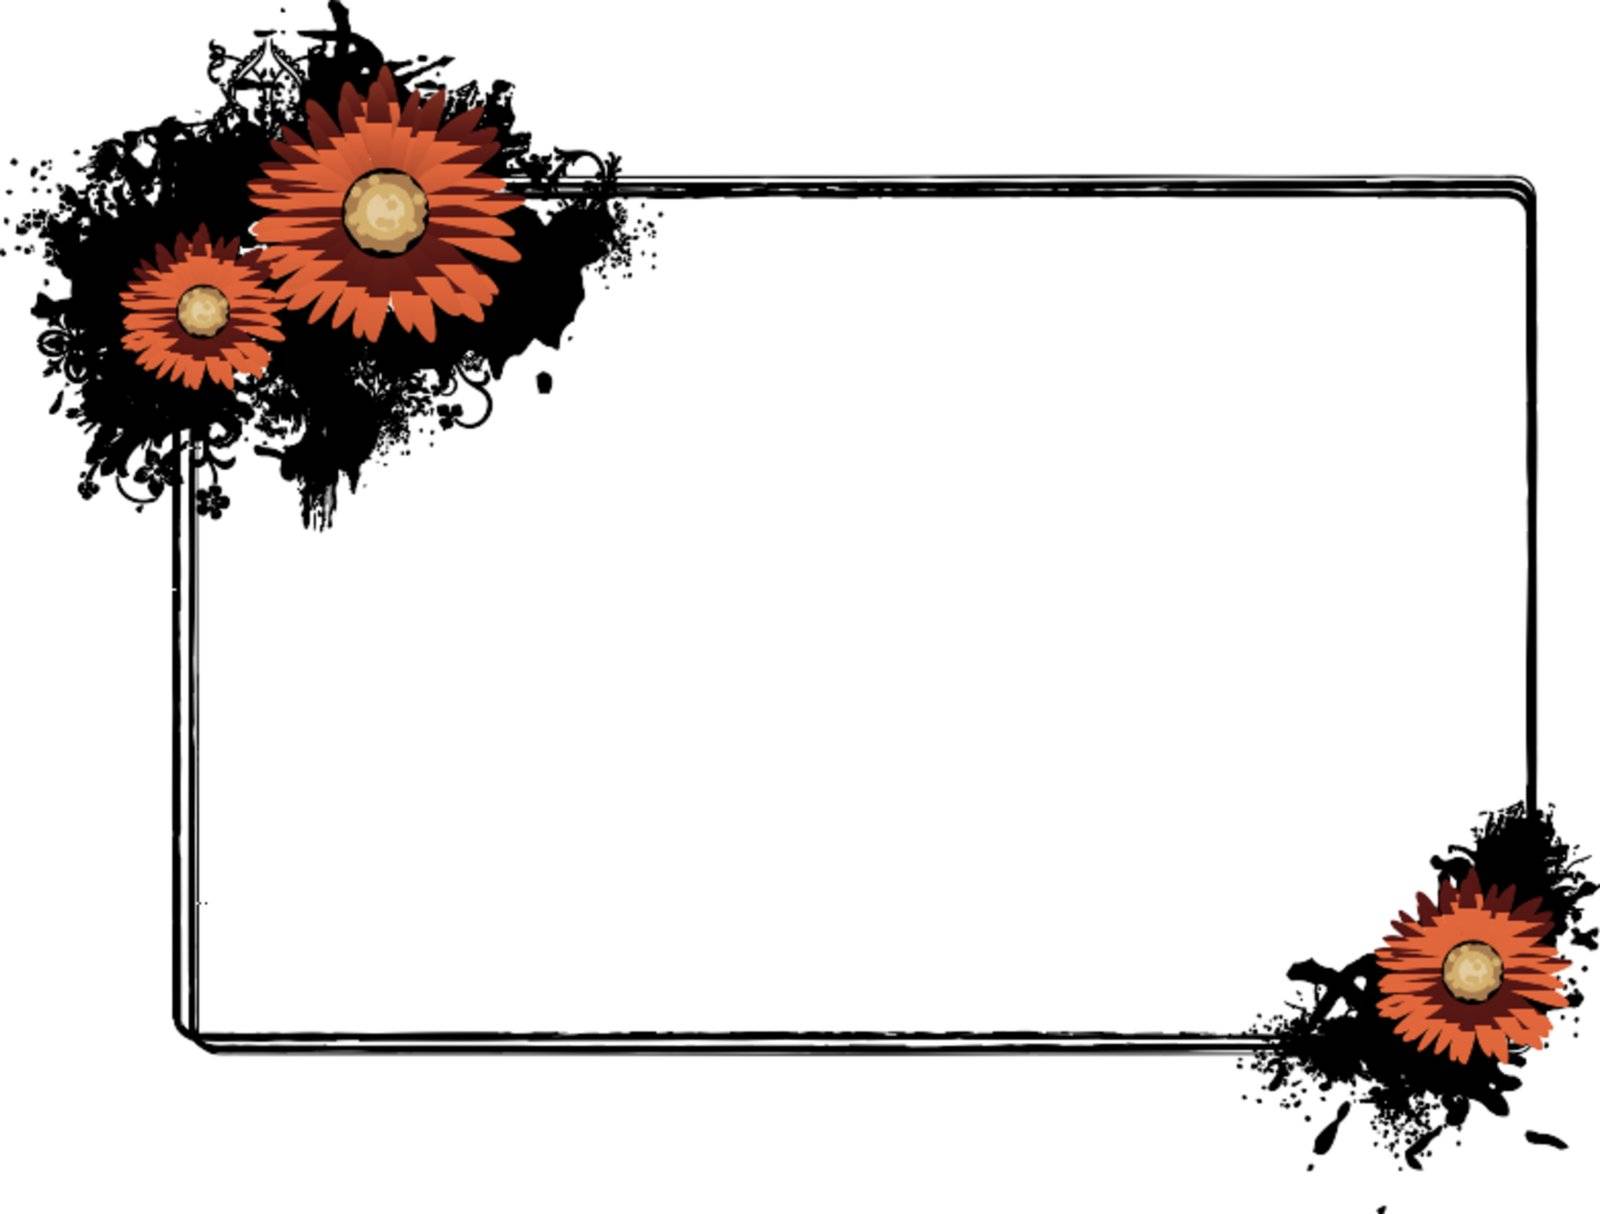 Rectangular Black Grunge Frame with Flowers Vector by marklar